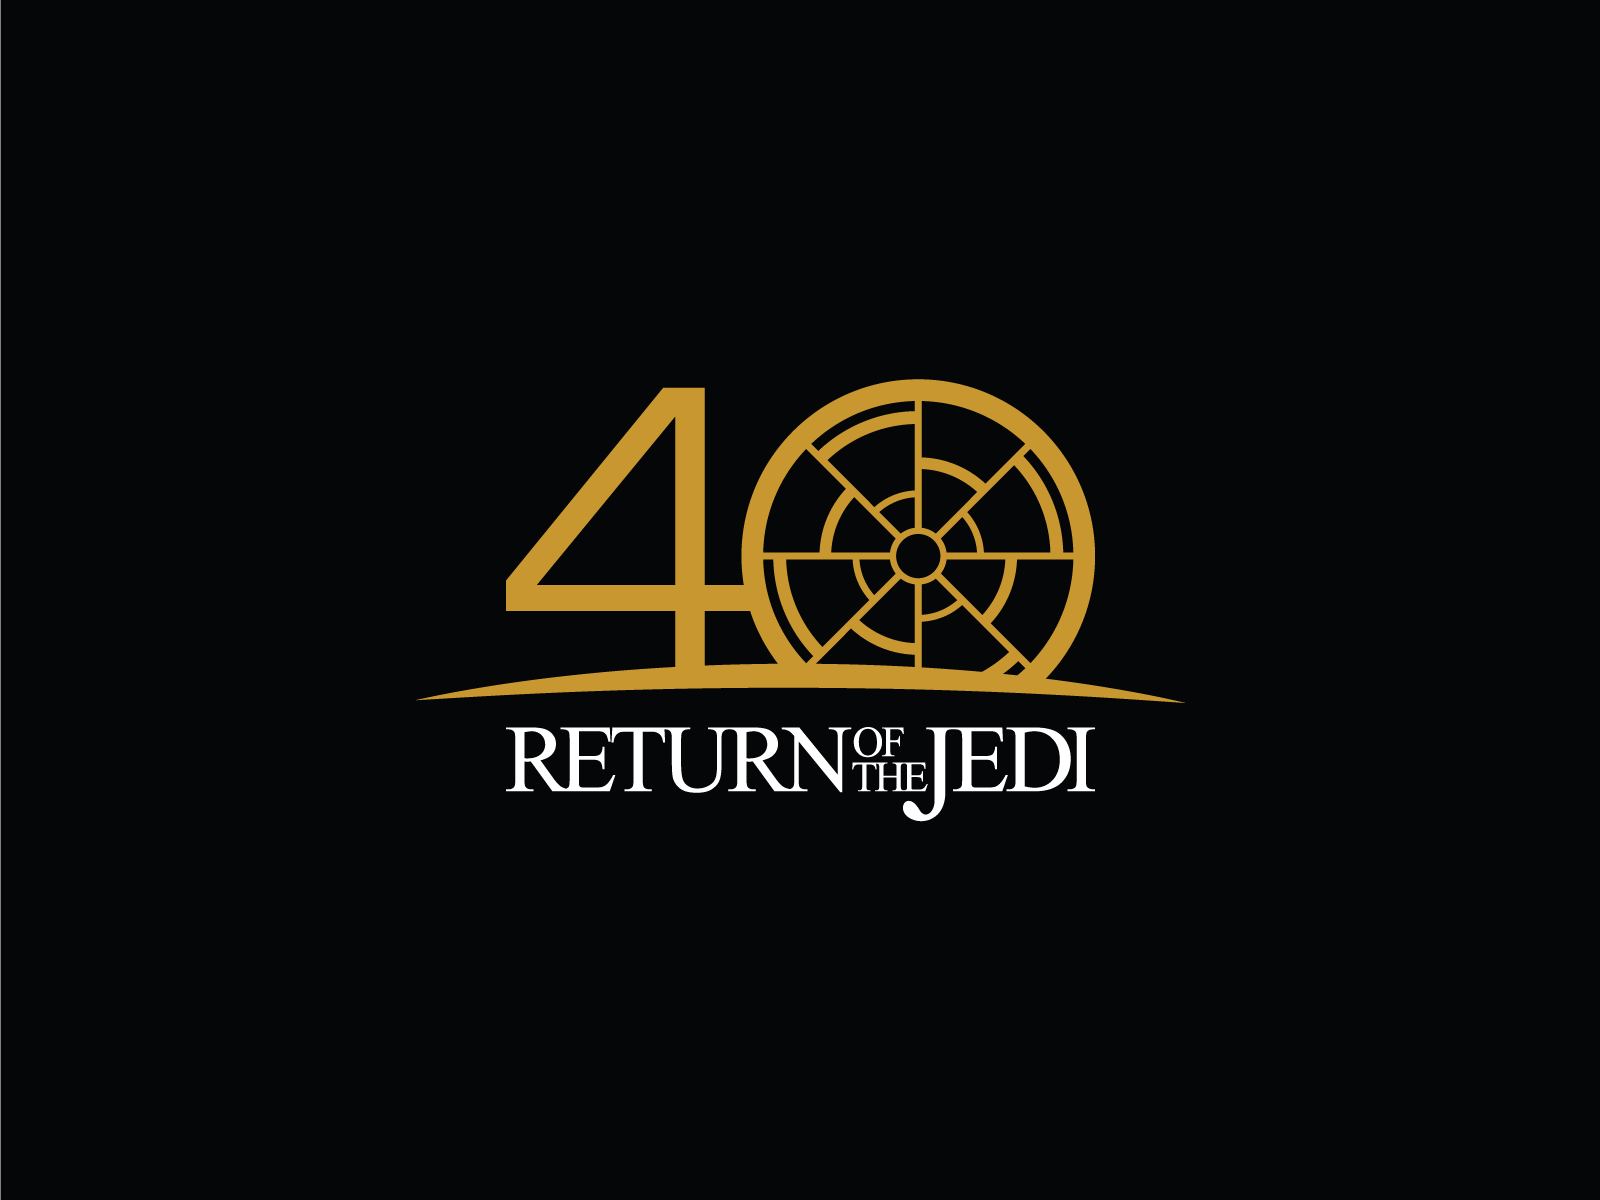 Star Wars Return Of The Jedi Th Anniversary By Matthew Doyle On Dribbble